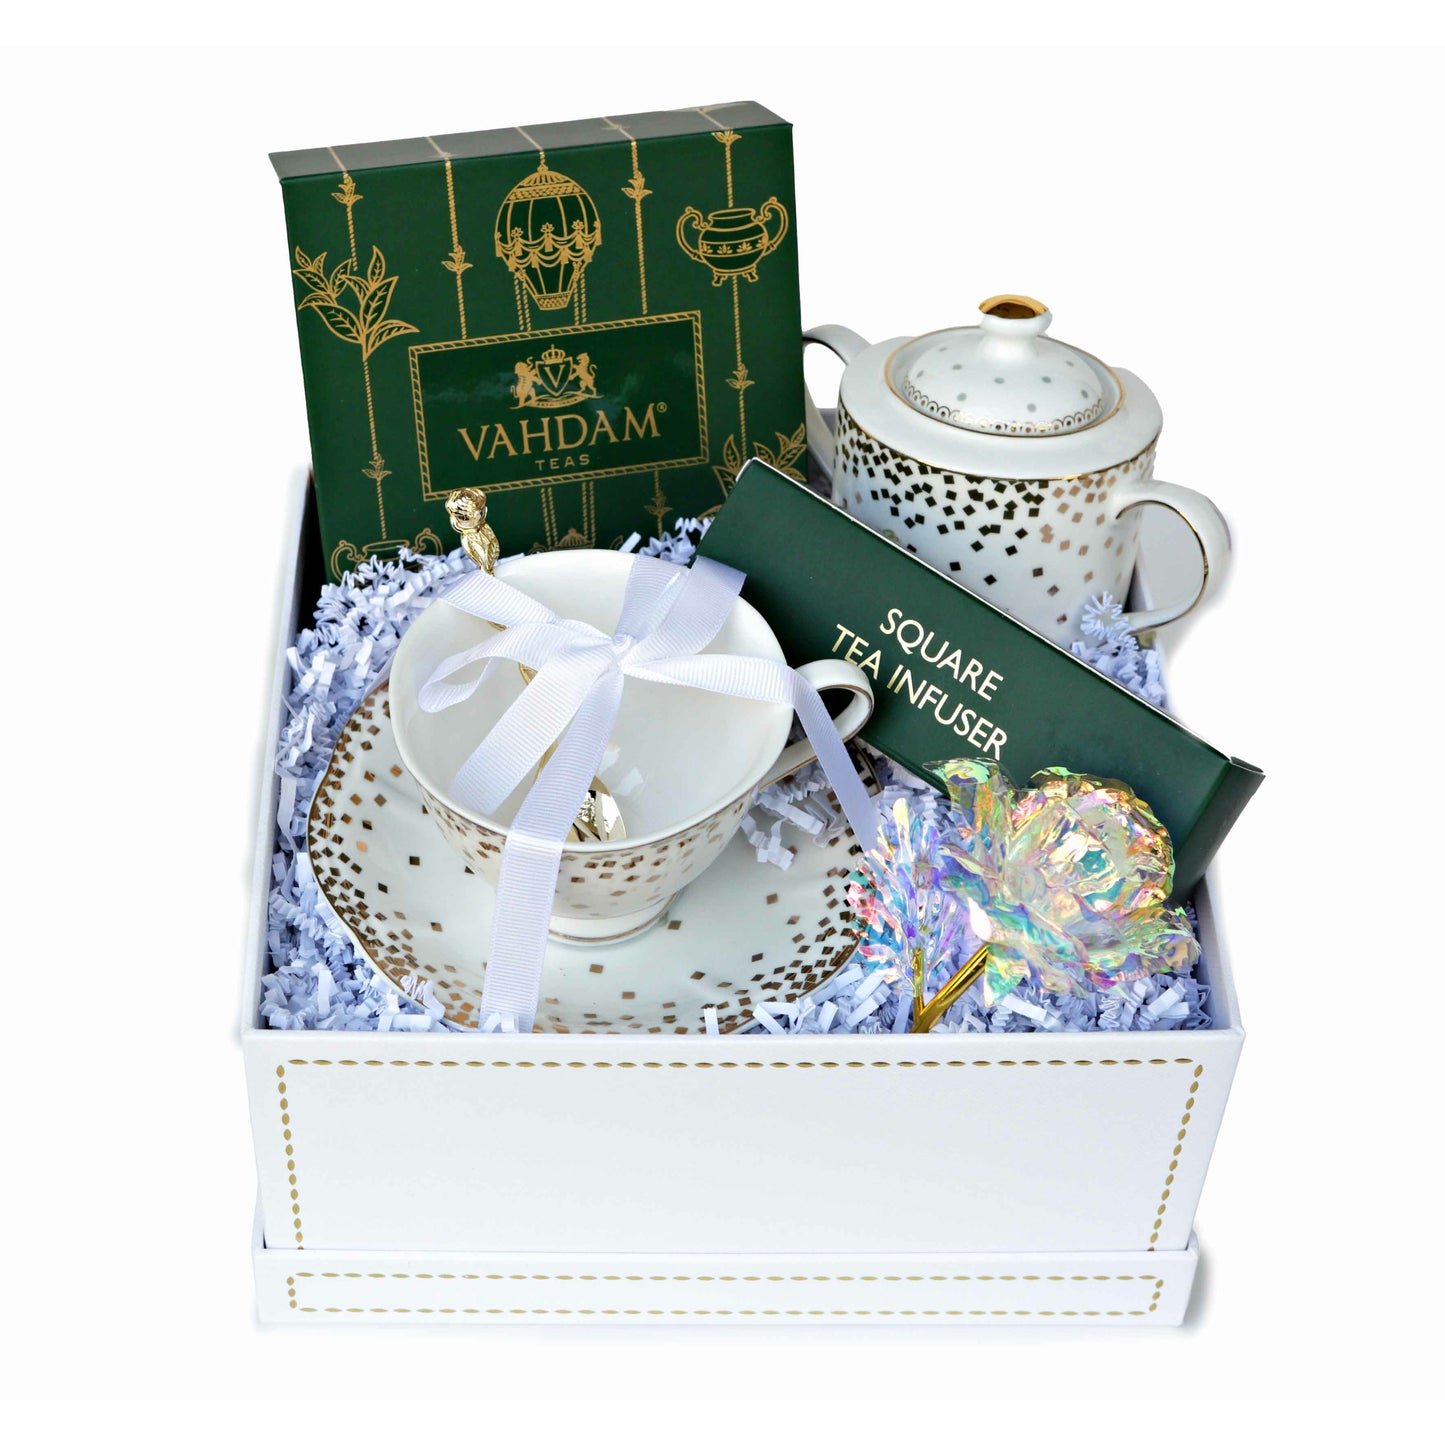 Vahdam Tea Time Gift Box - DJW Custom Baskets & Beyond